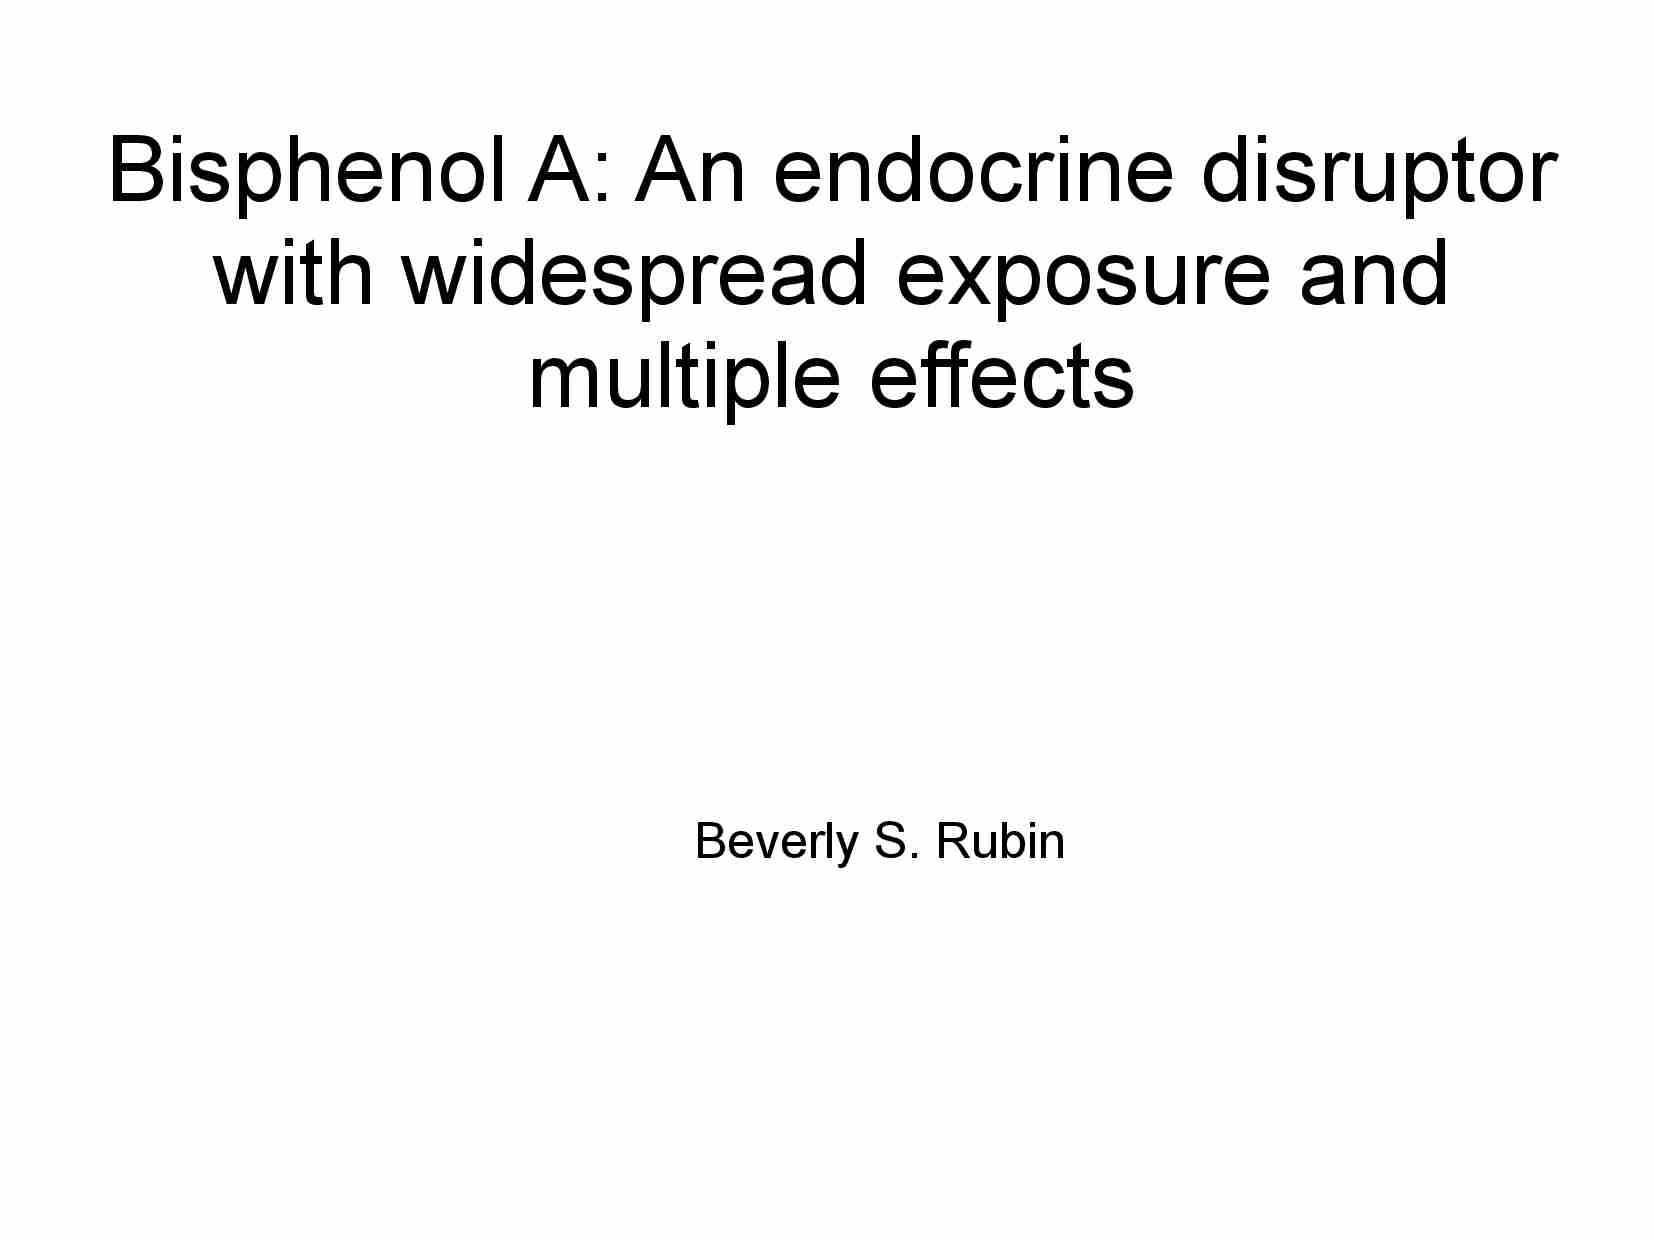 Bisphenol A - strona 1